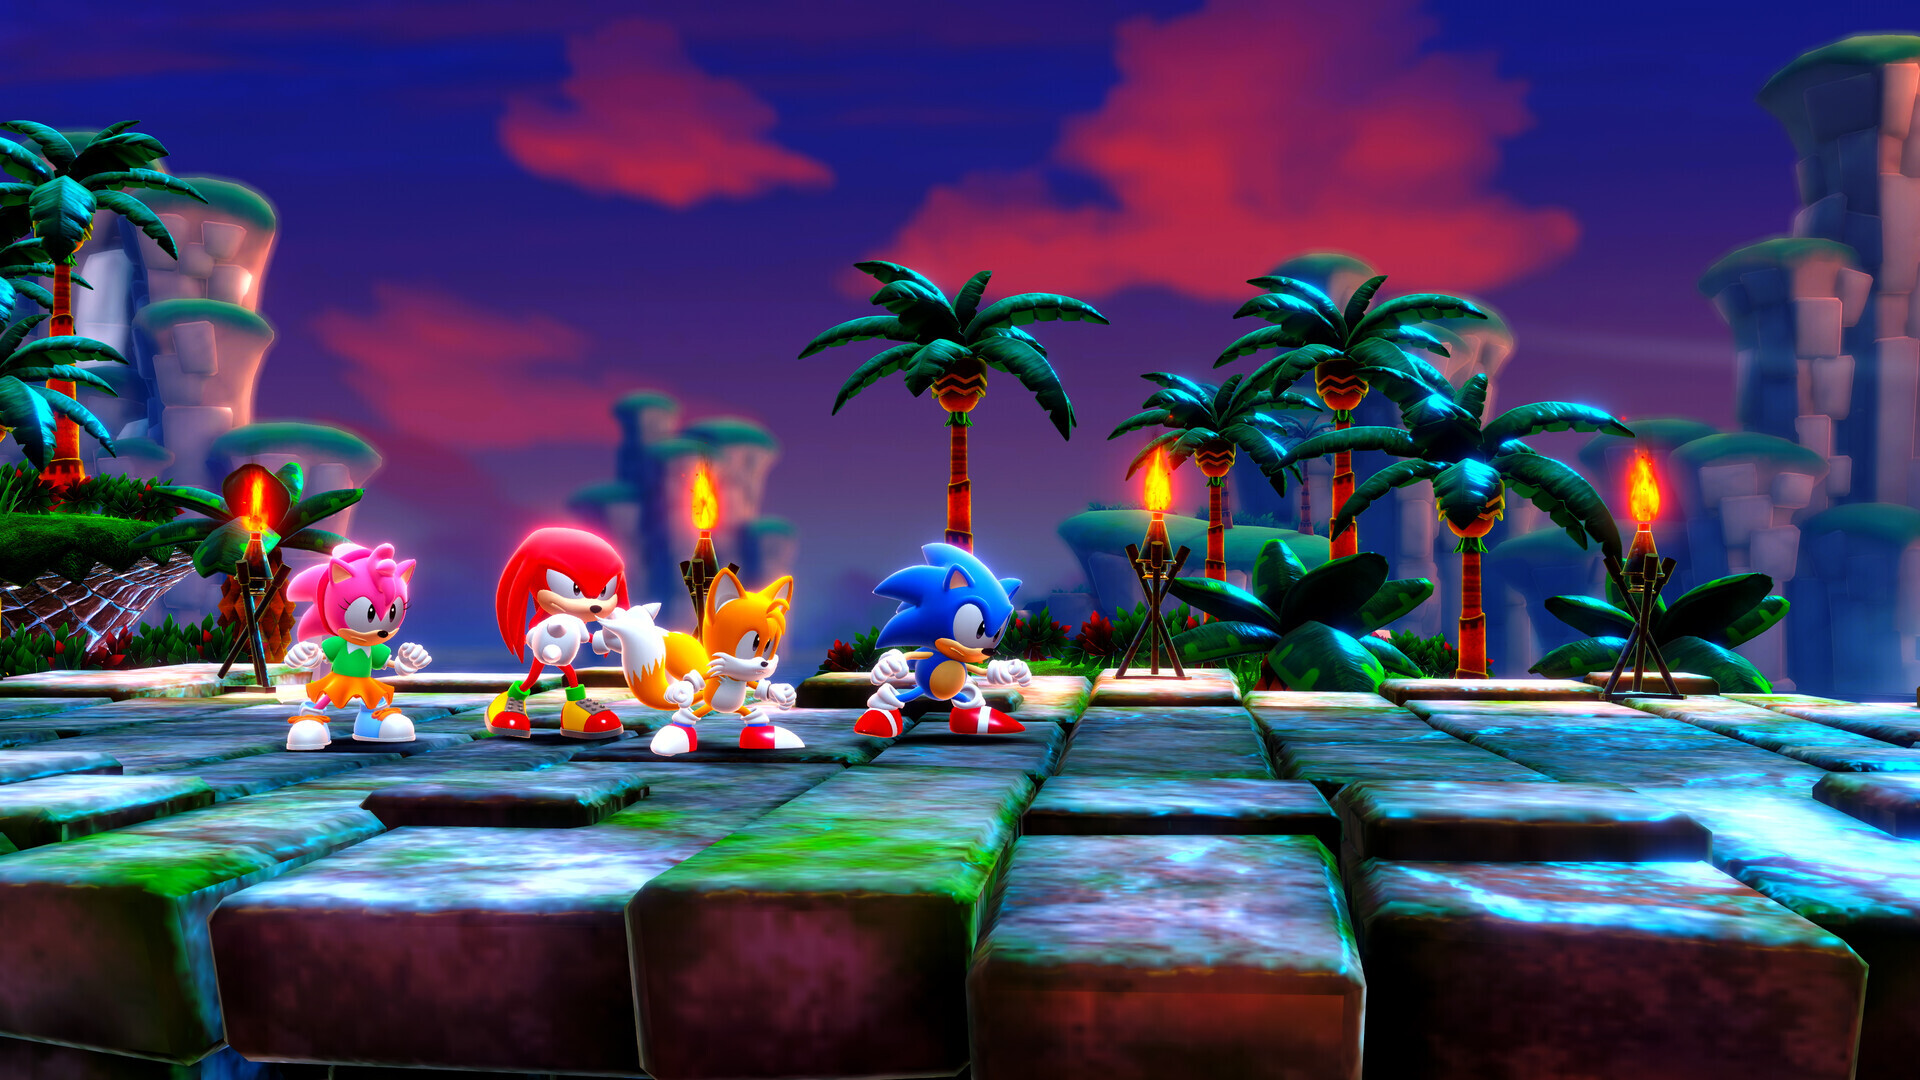 My Own Design Of Sonic, Super Sonic, Hyper Sonic & Ultra Sonic :  r/SonicTheHedgehog